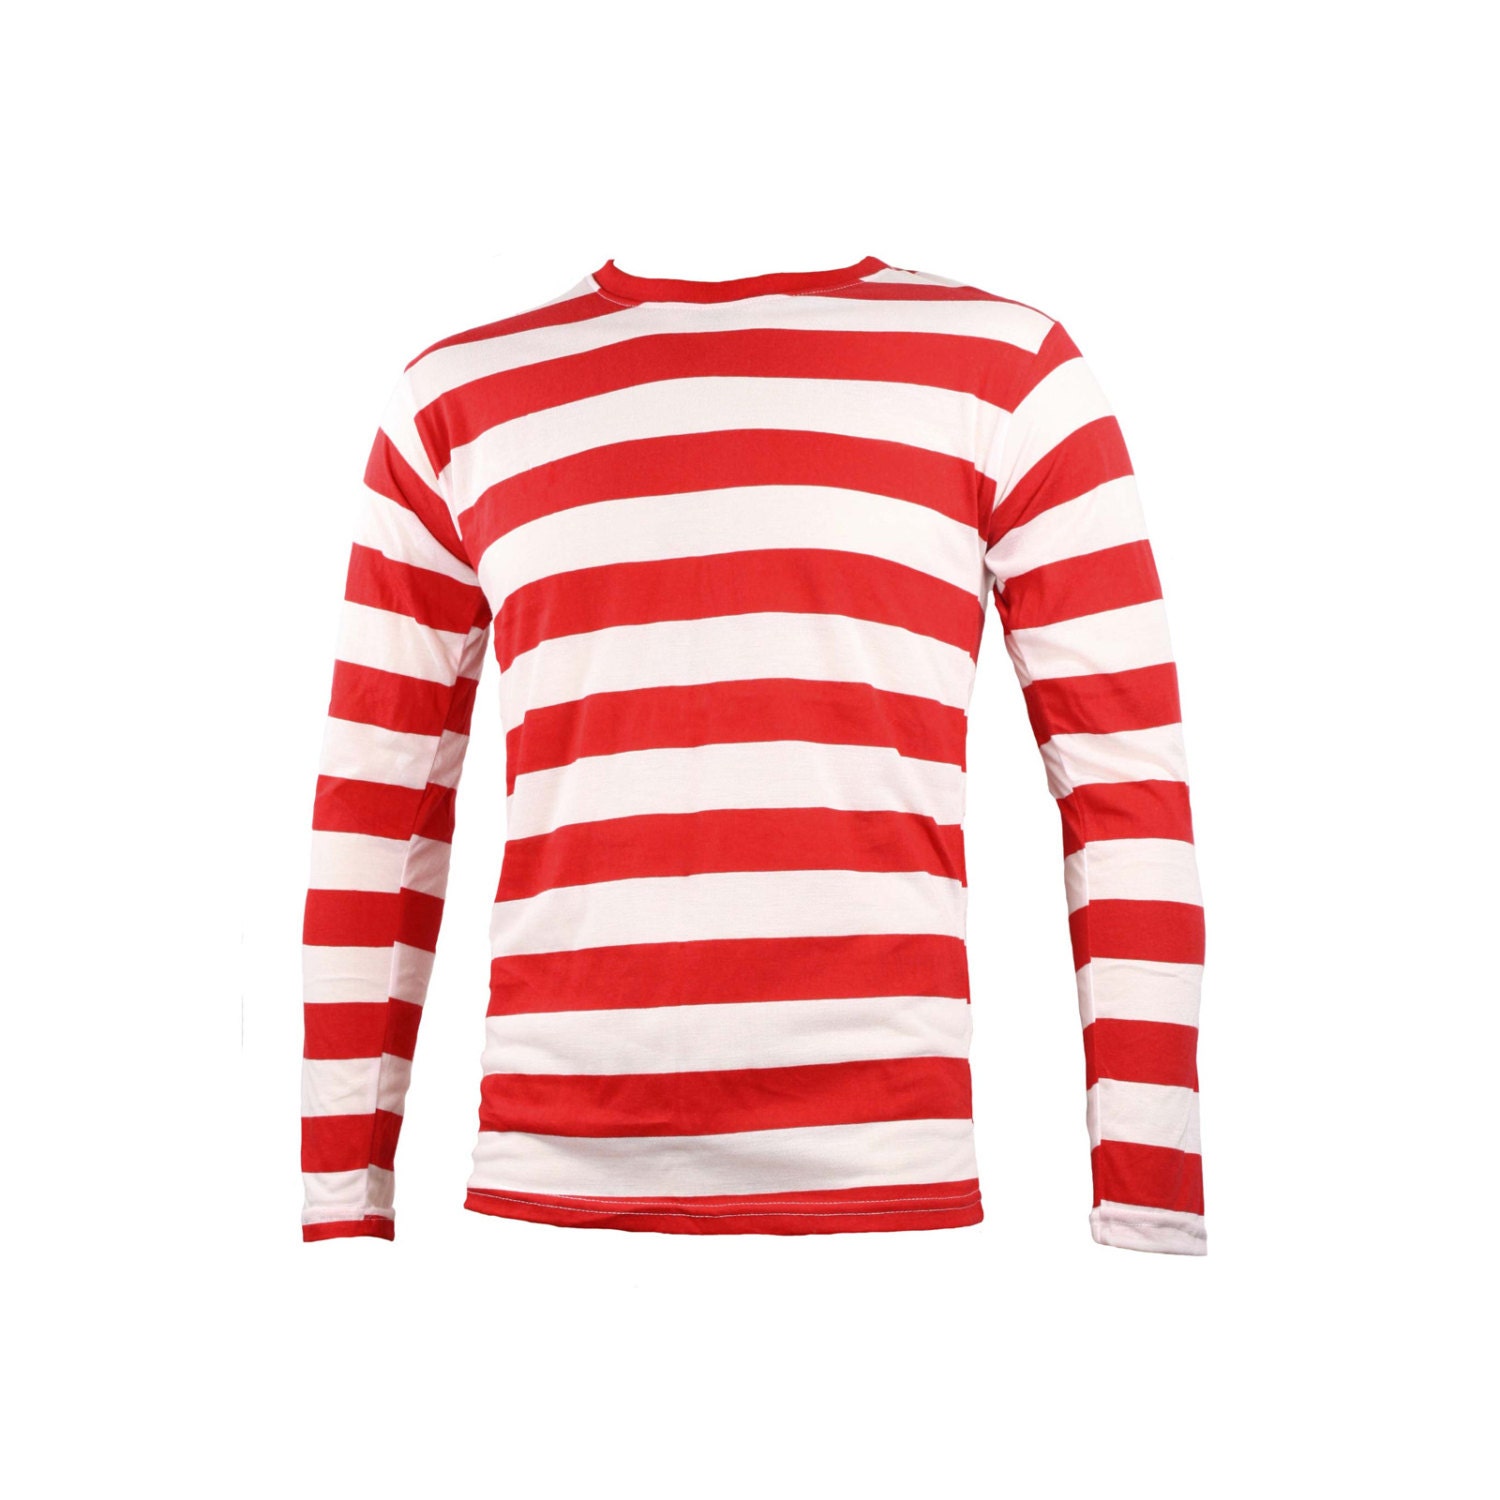 Red Striped Shirt 